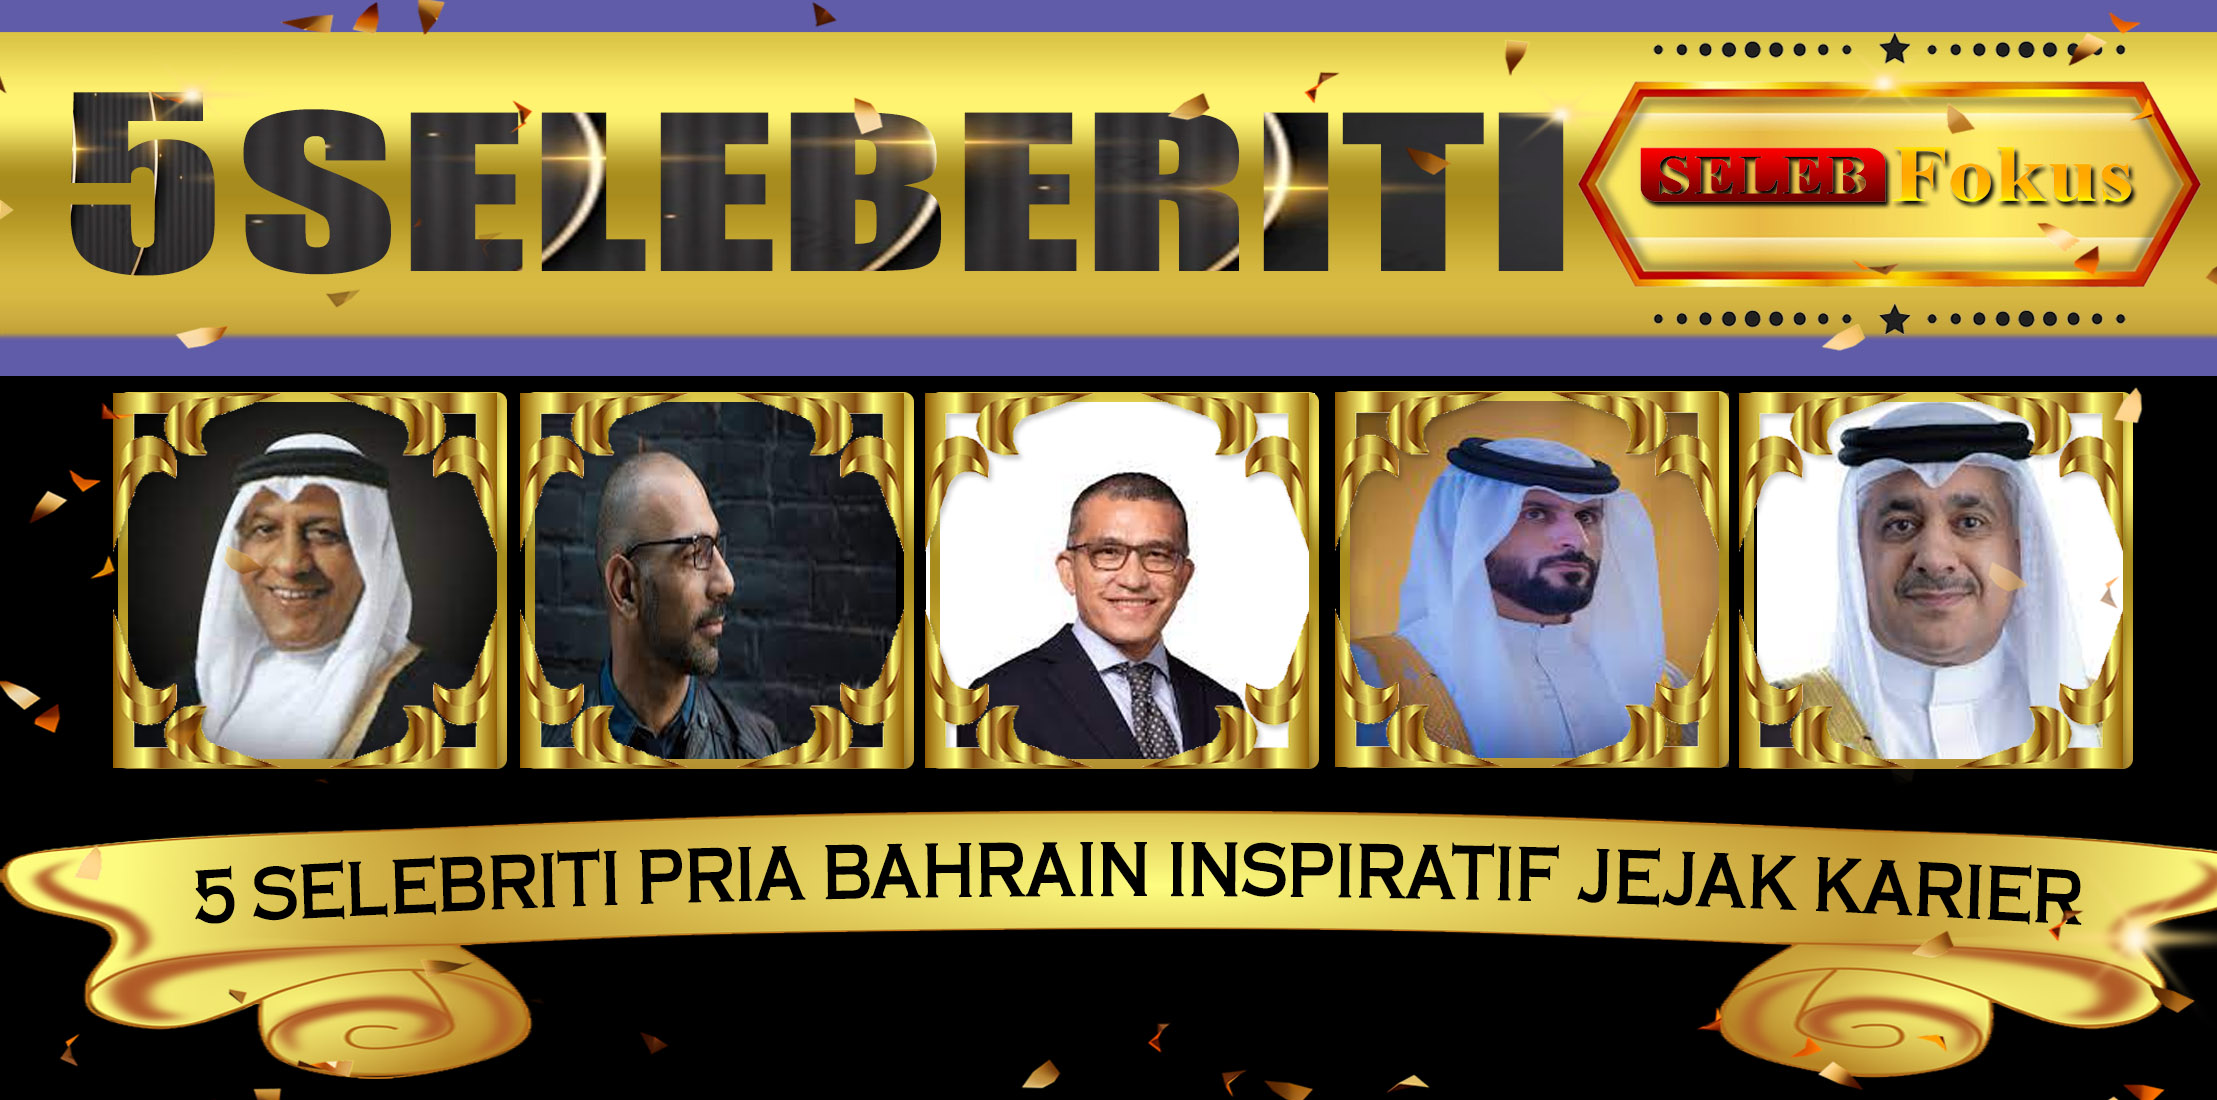 5 Selebriti Pria Bahrain Inspiratif Jejak Karier